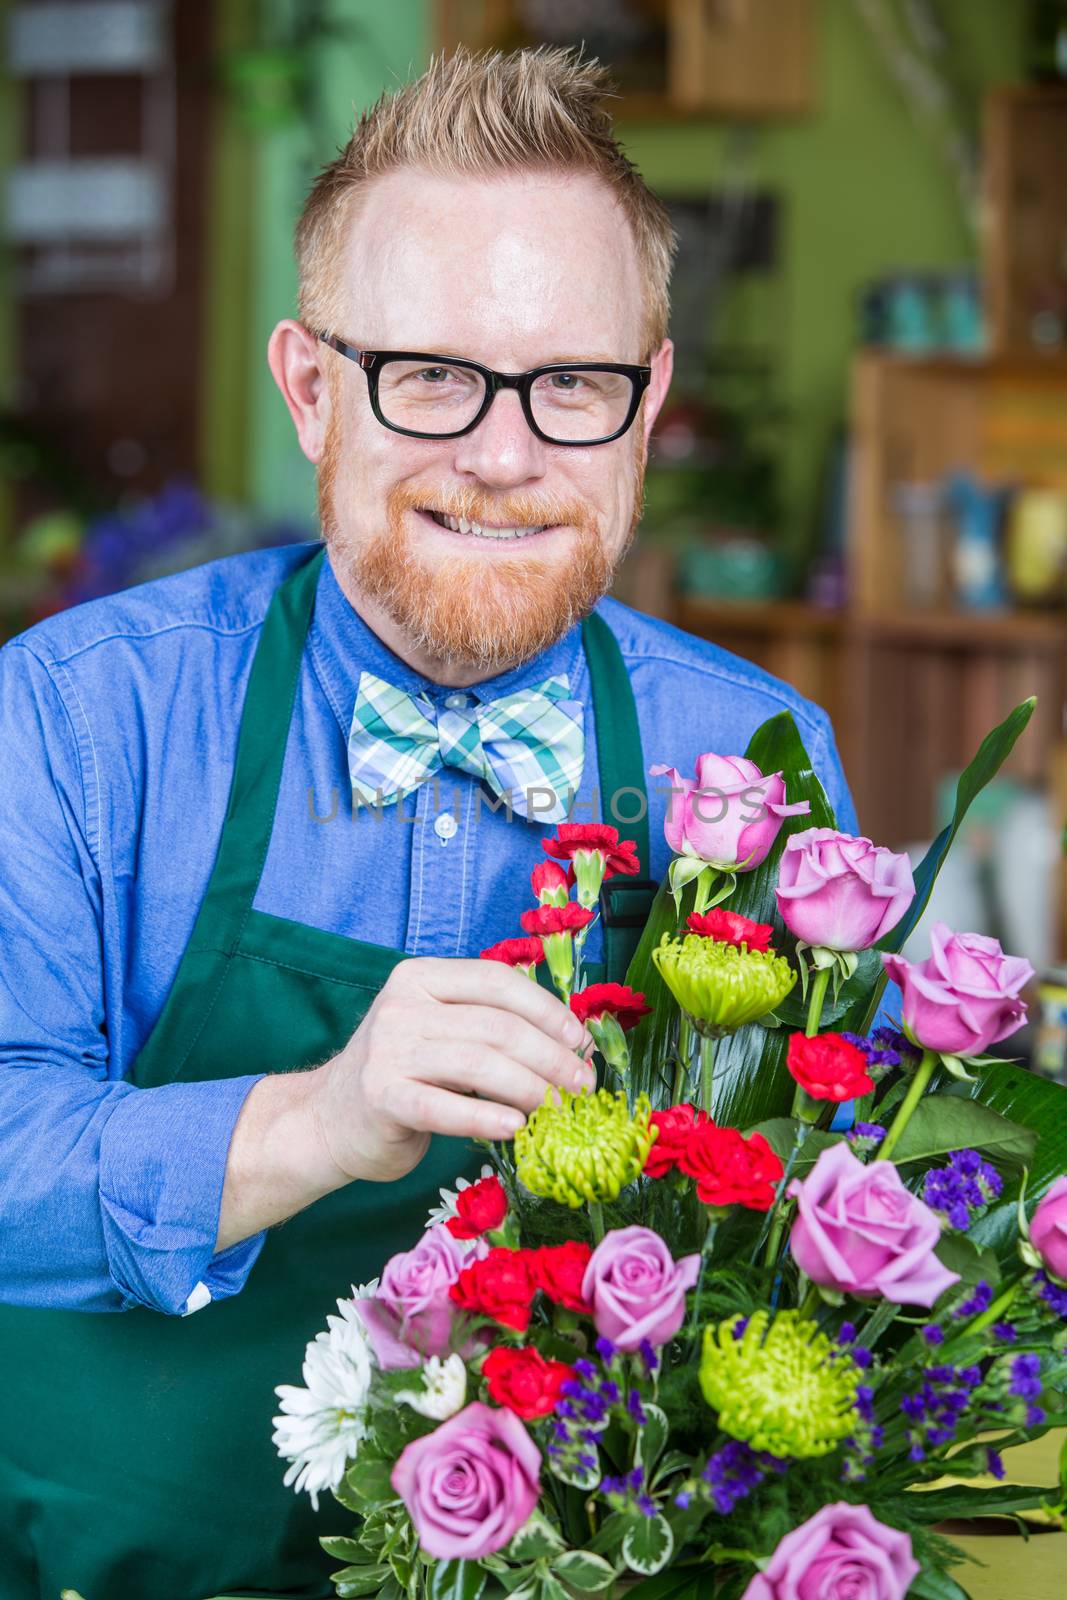 Dapper man wearing eyeglasses and apron creating a flower arrangement